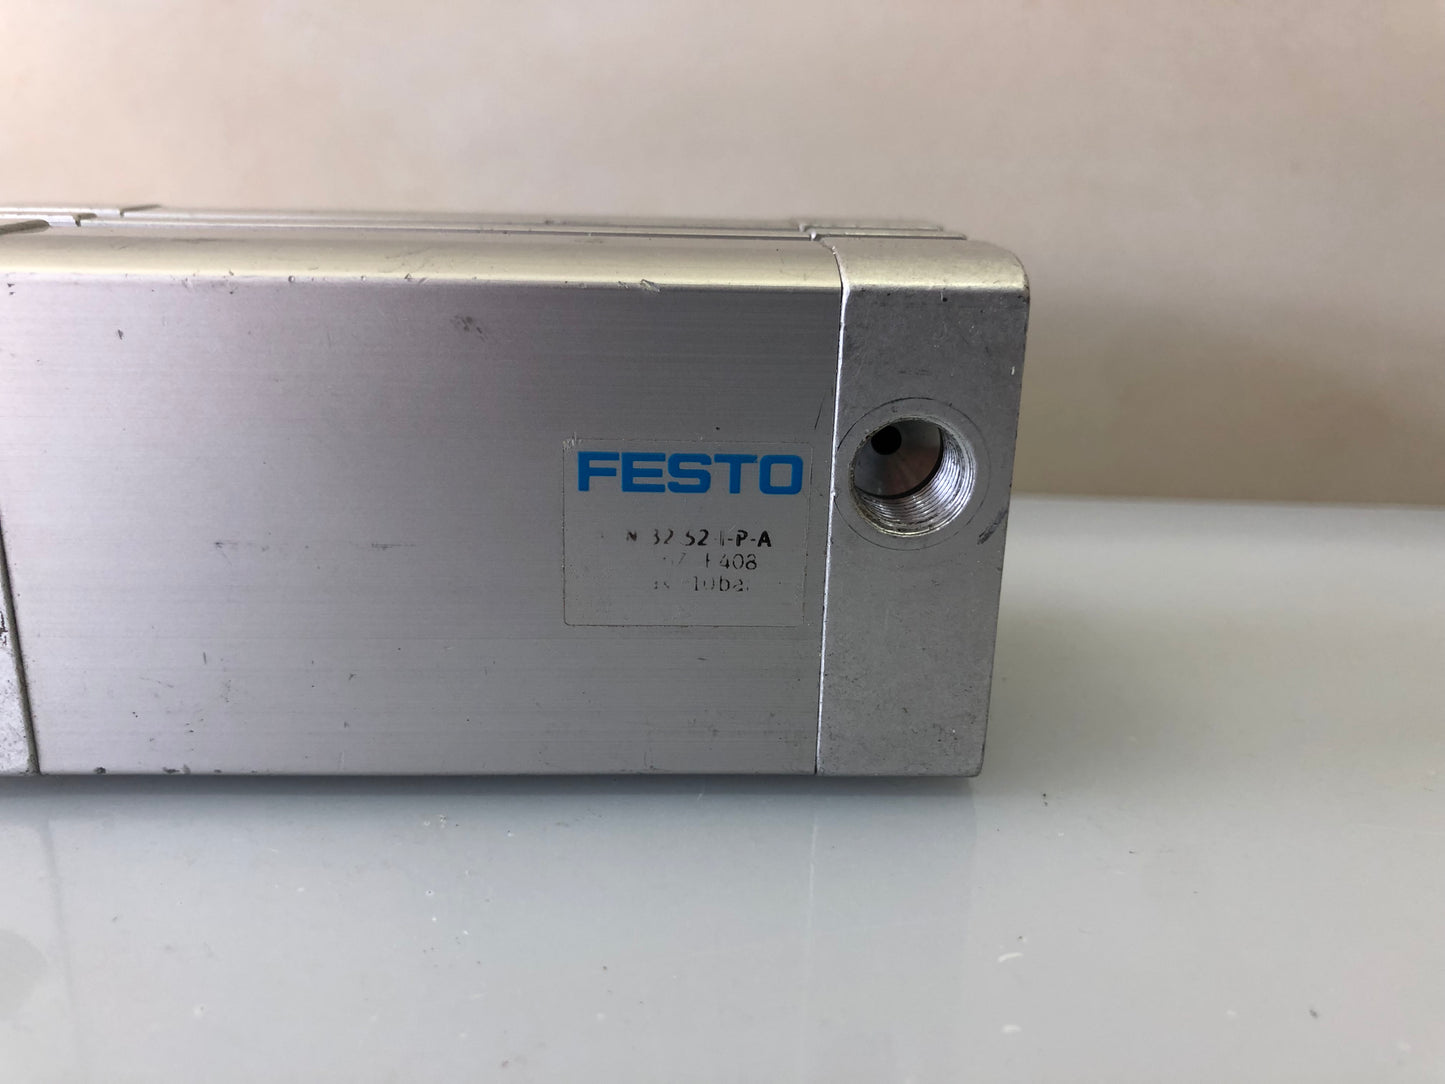 Festo ADN-32-52-I-P-A-S2 Compact Pneumatic Air Cylinder